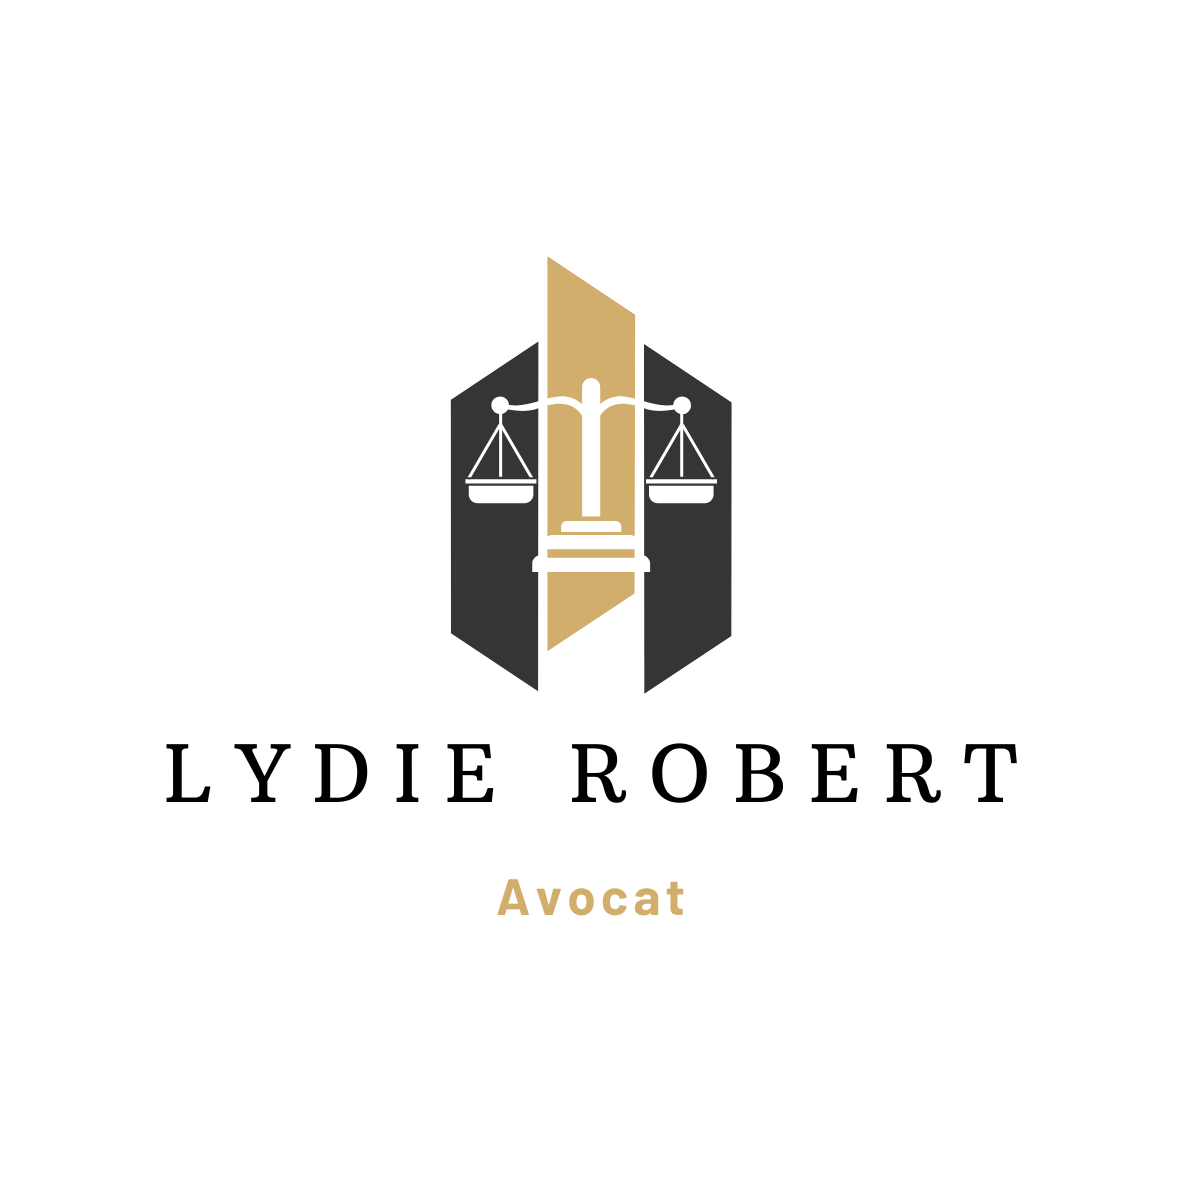 Lydie Robert avocat - 1